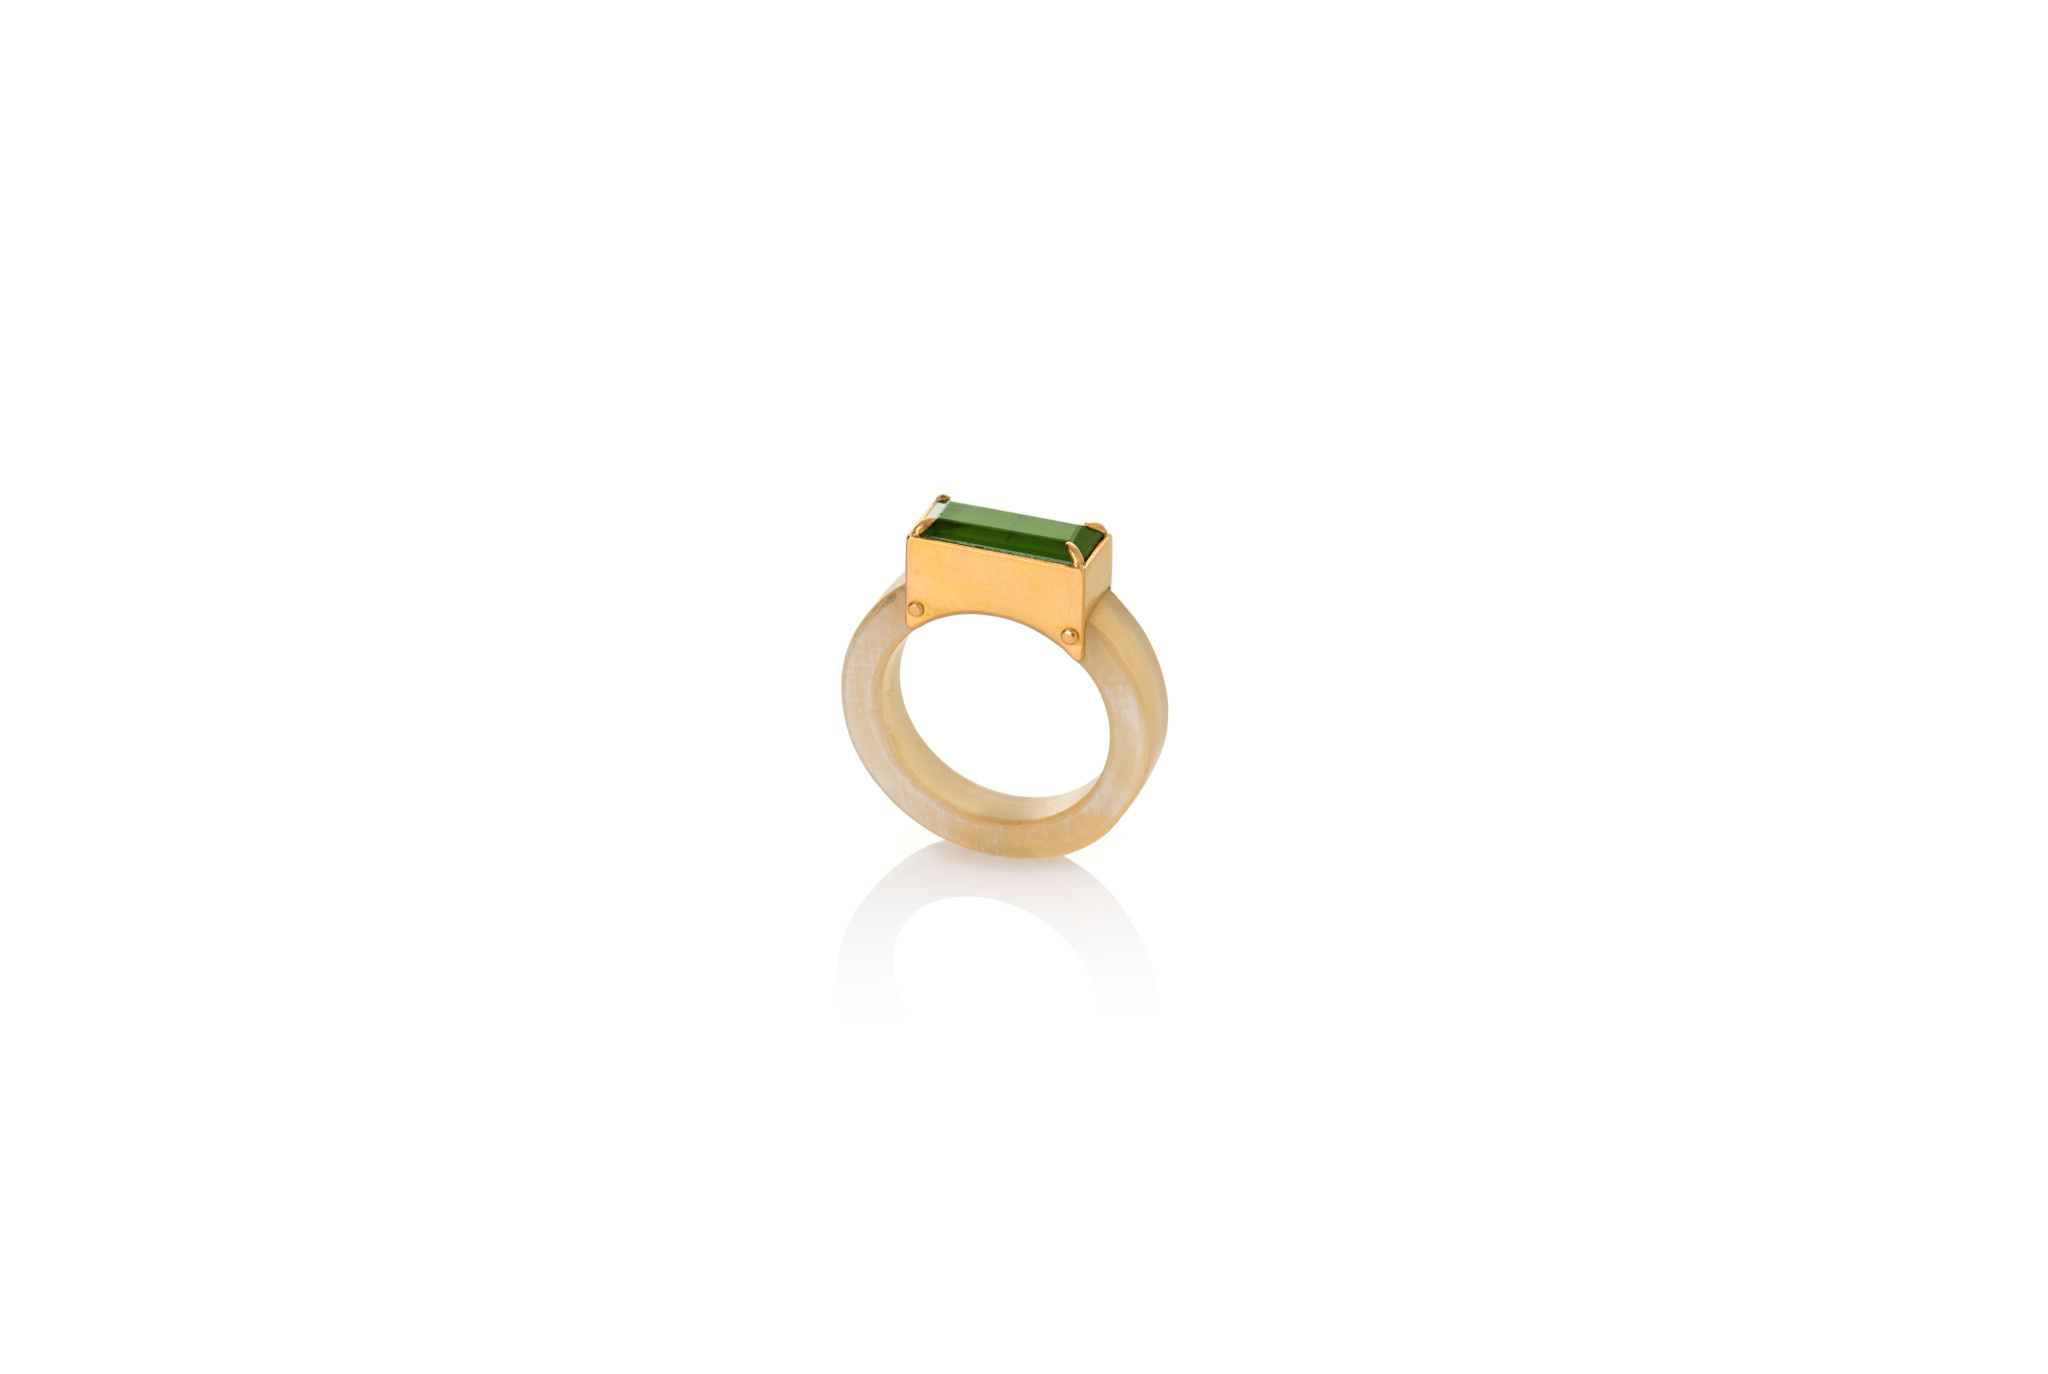 Lisa Black Jewellery - Green Tourmaline Ring in Translucent Blue Horn - 22ct Gold - Handmade in Australia. Size "L"-2